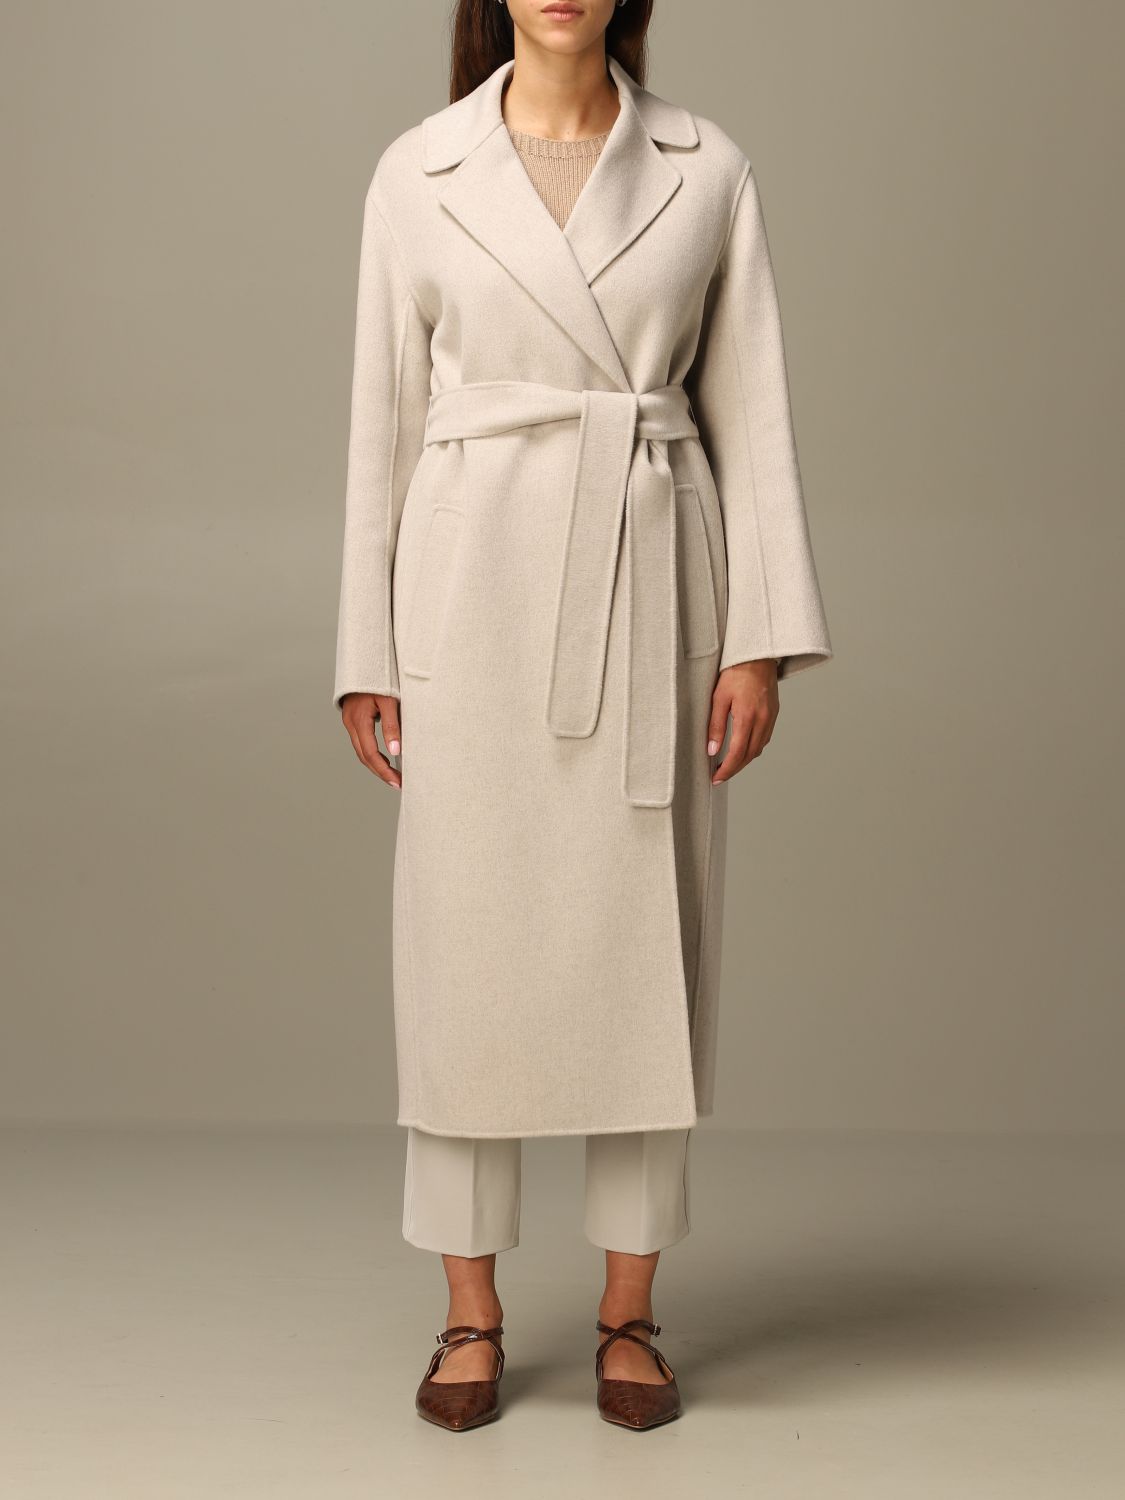 S MAX MARA: Lugano coat in virgin wool - Mastic | S Max Mara coat ...